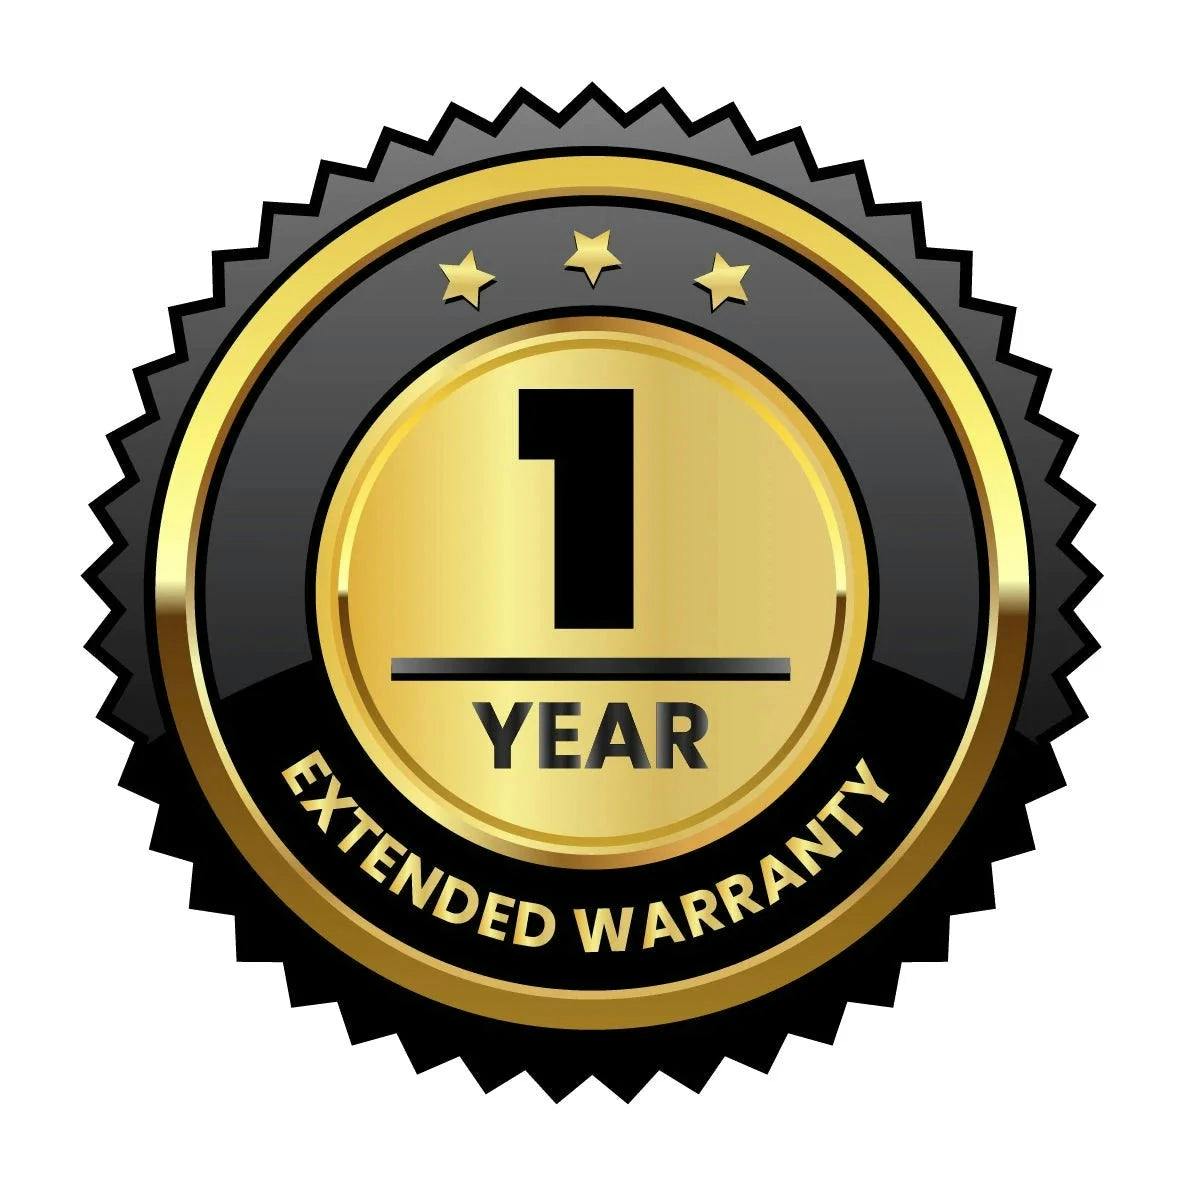 Extended 1-year warranty